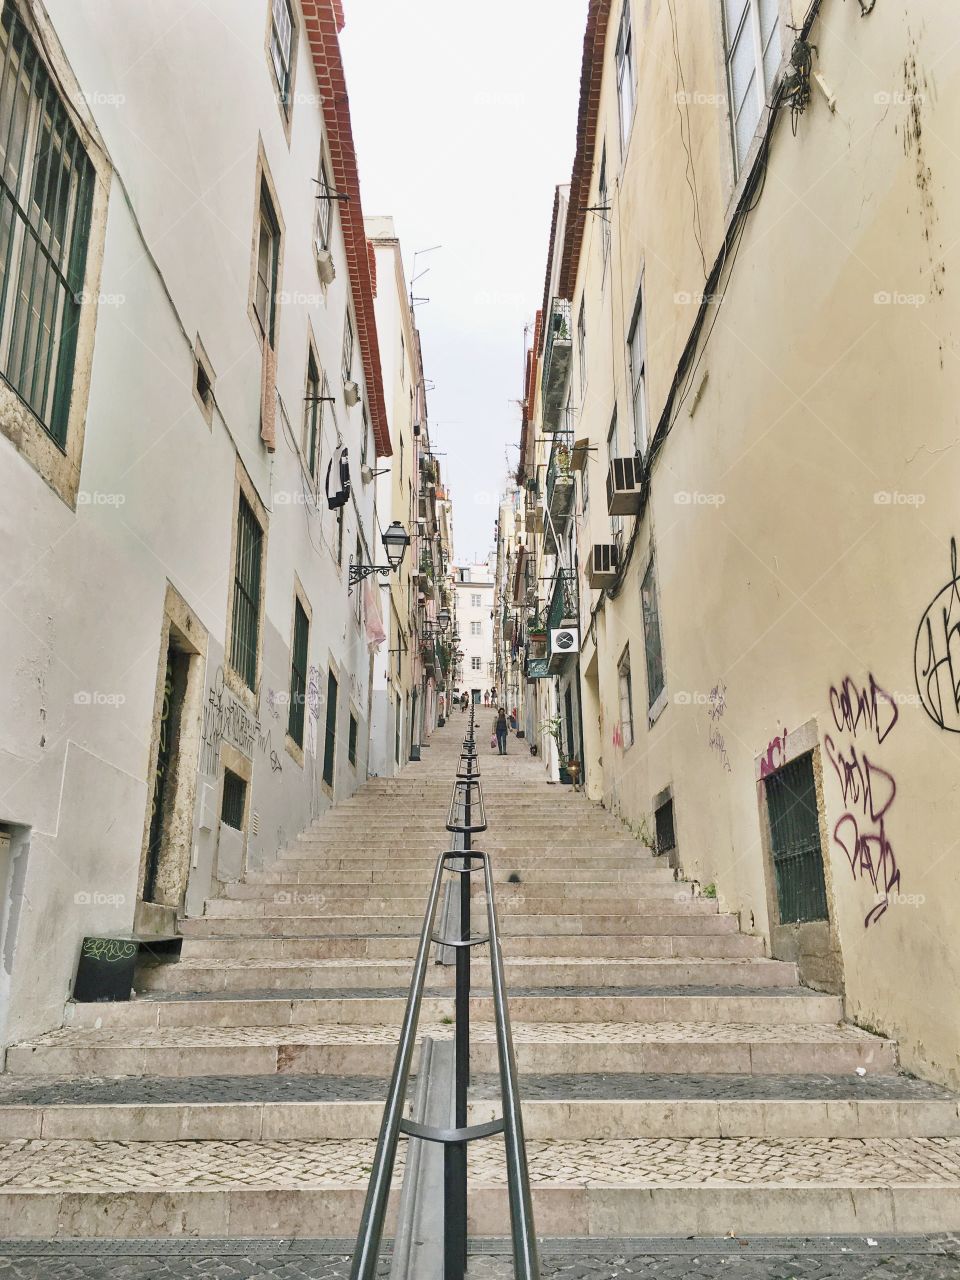 Stairway in Lisbon, Portugal